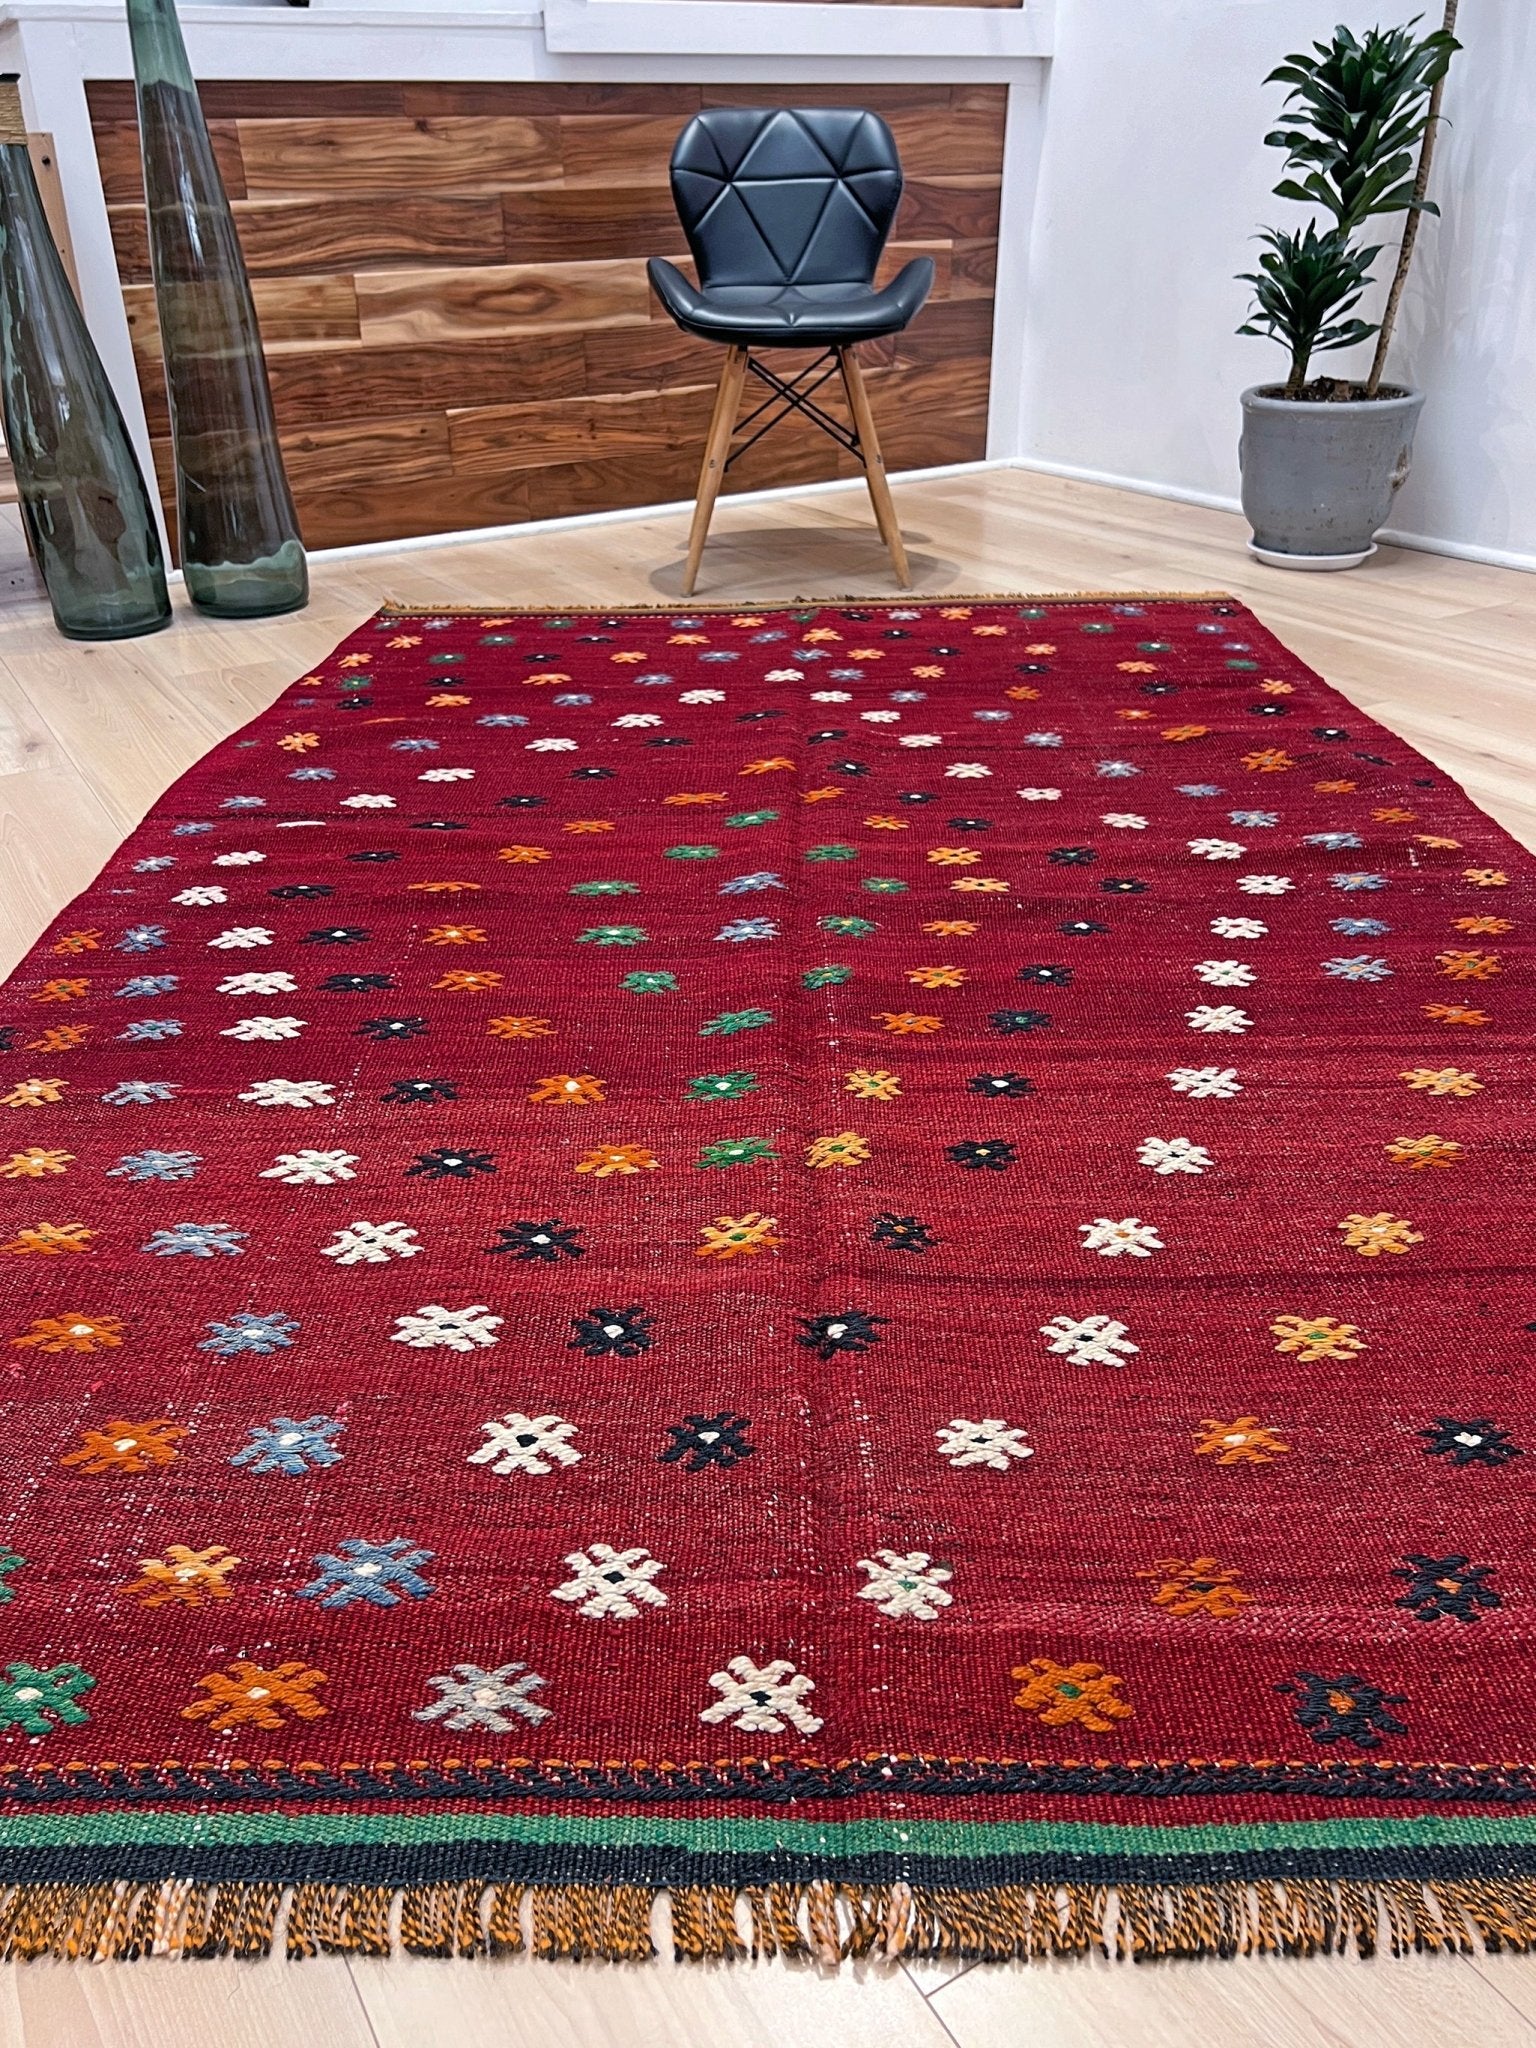 flower vintage turkish kilim rug shop san francisco bay area. Buy handmade wool rug online.